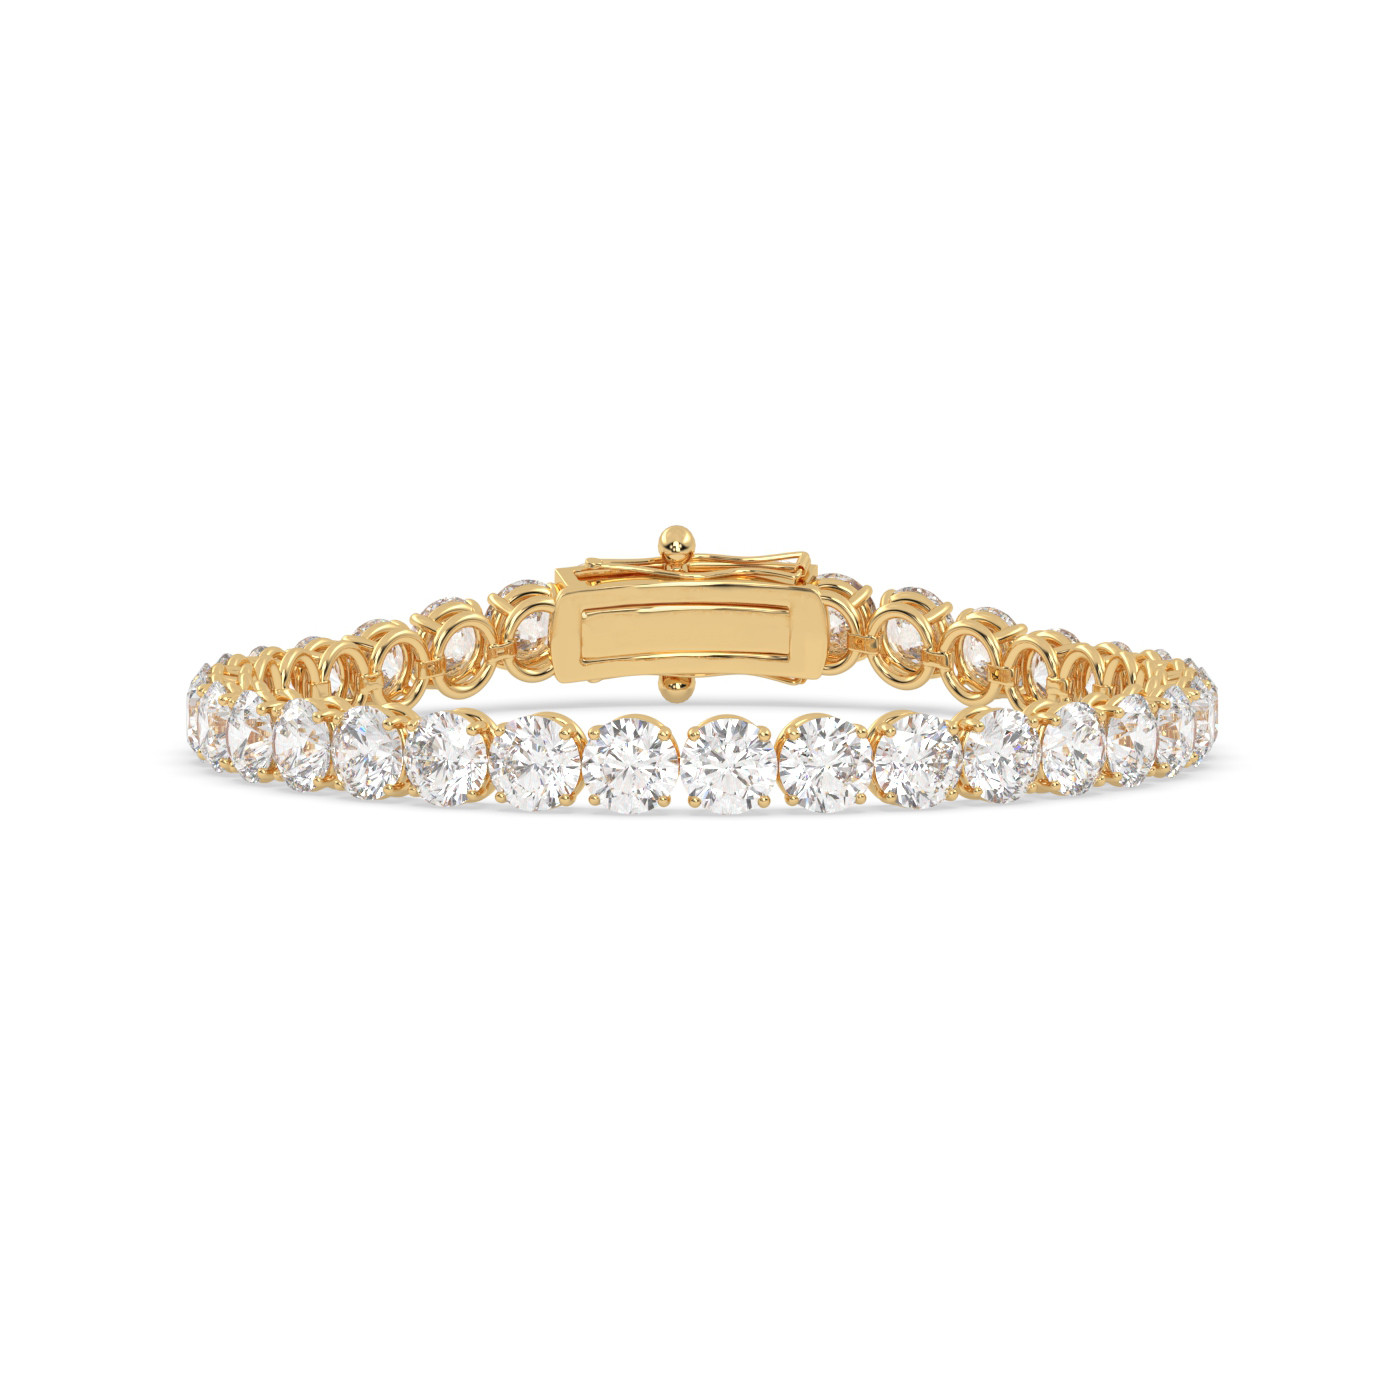 18k yellow gold 4.5 carat round diamond tennis bracelet with traditional lock sytem Photos & images